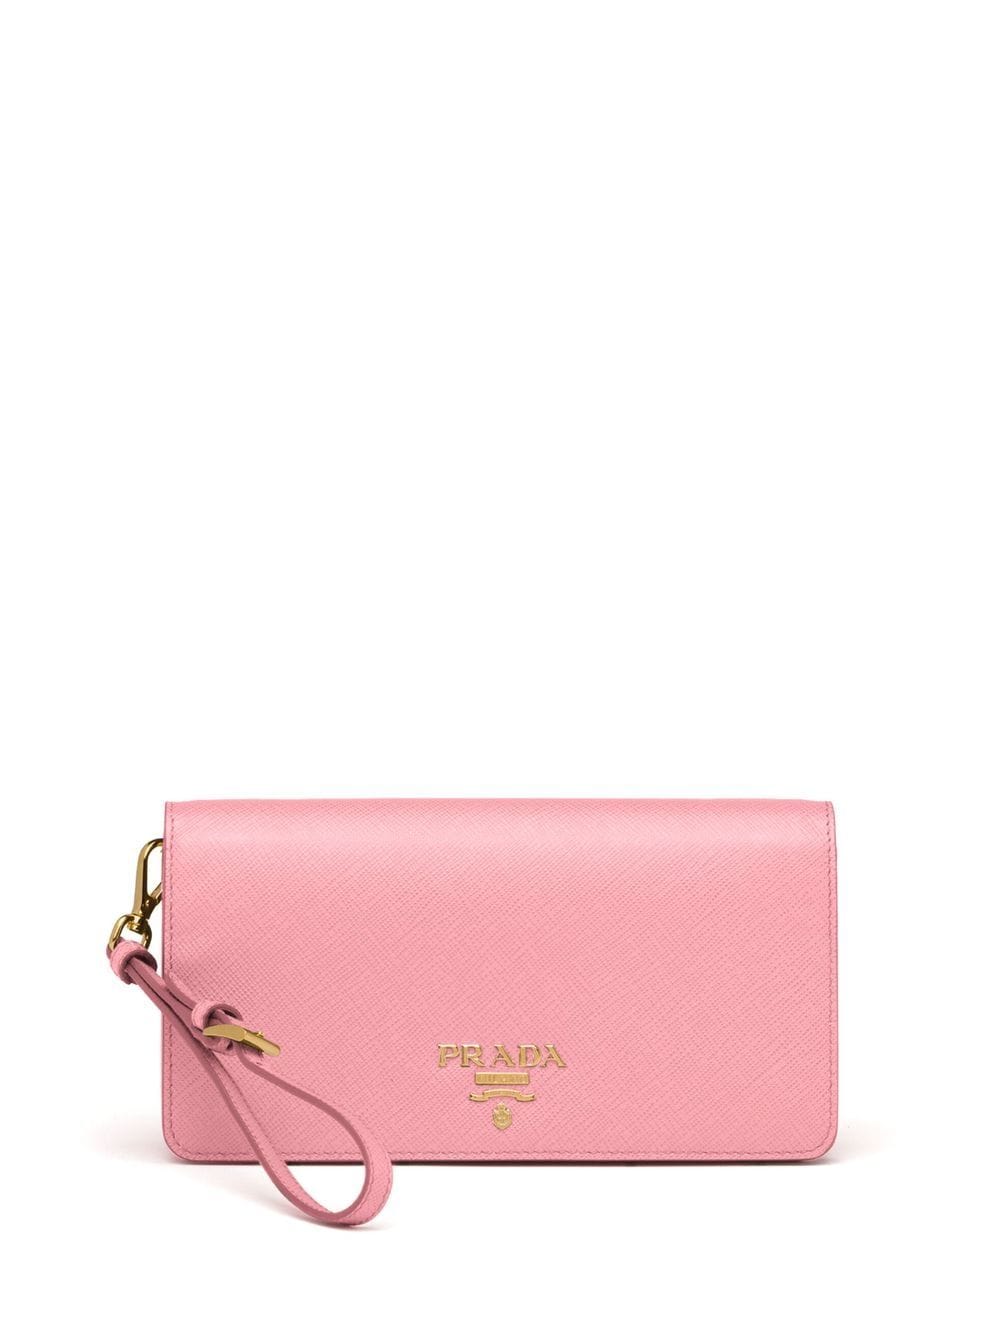 Prada Pink Saffiano Wallet on Chain